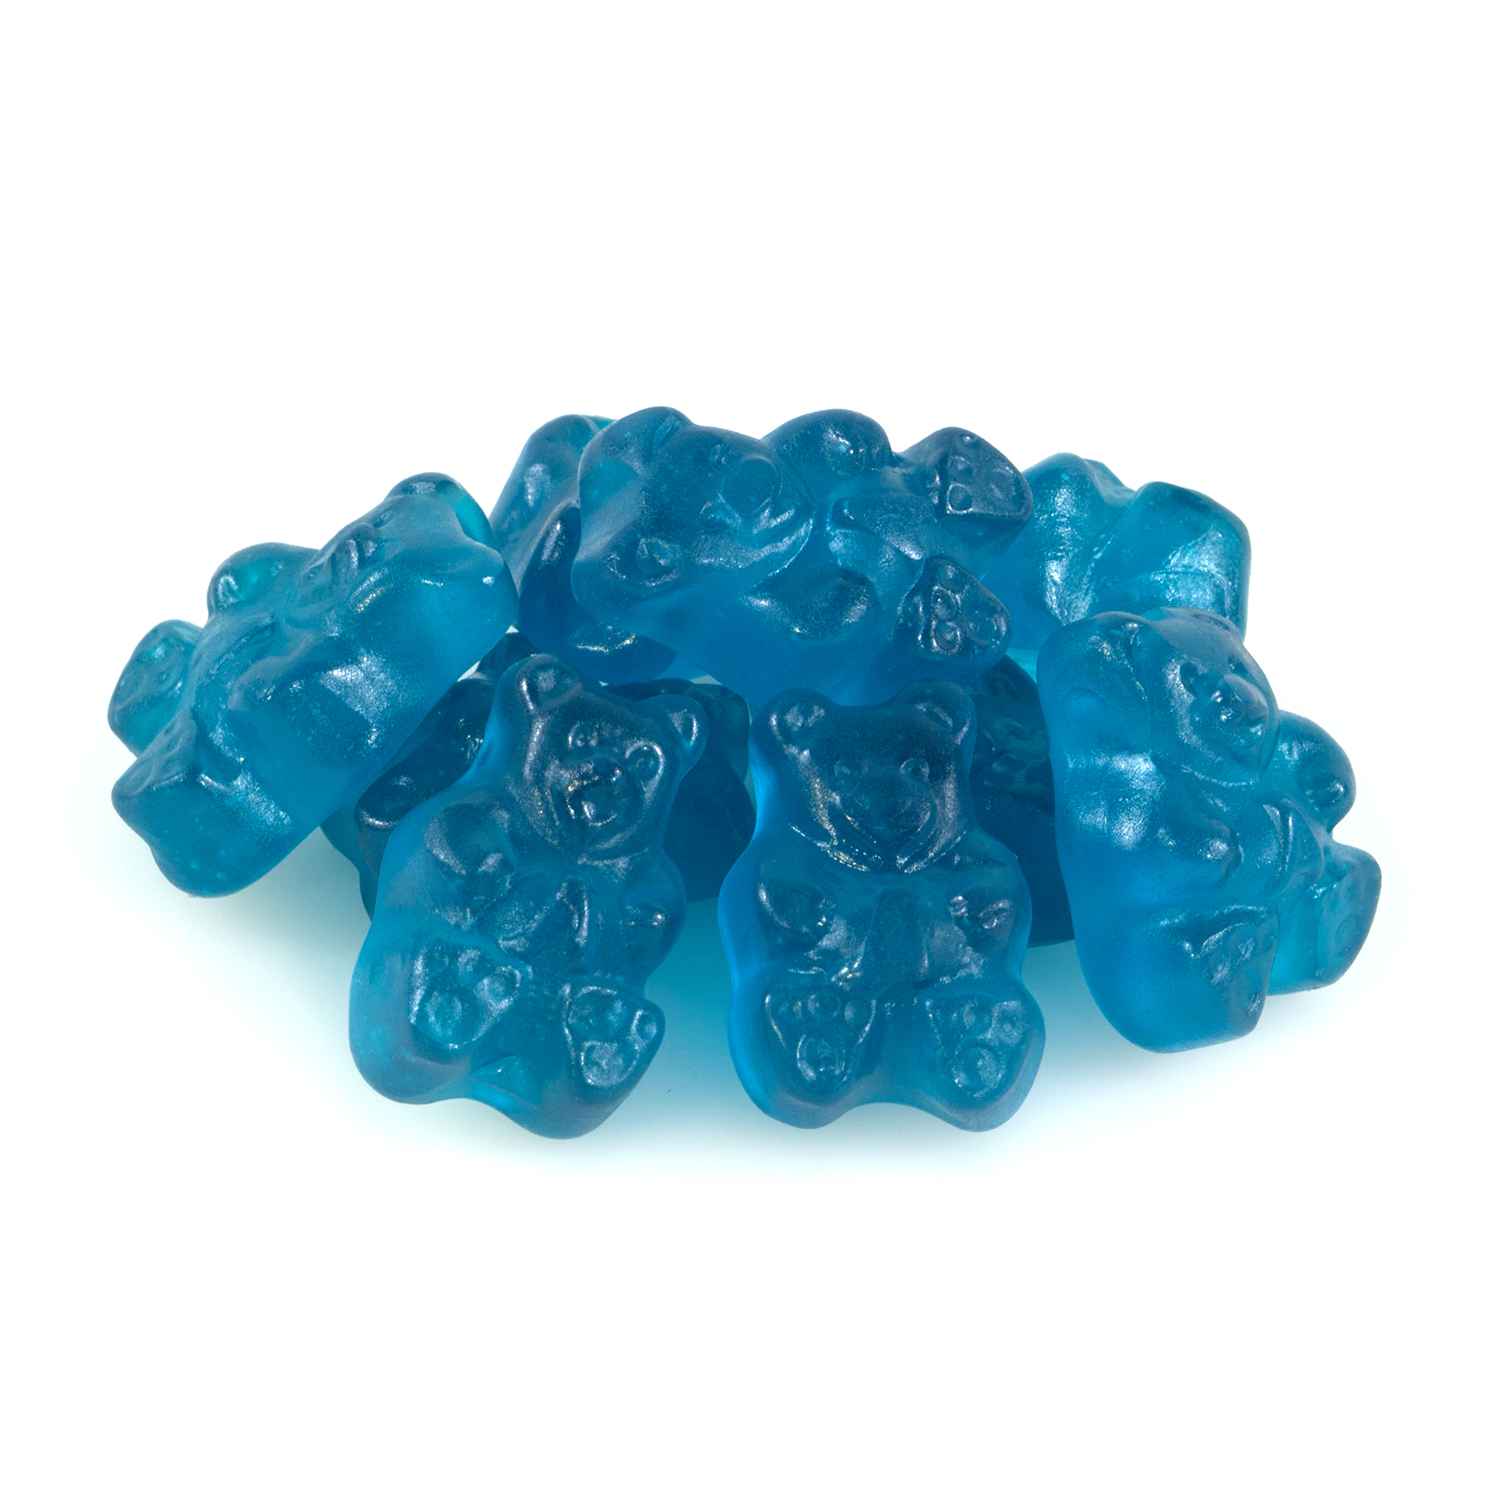 Blue Raspberry Gummi Bears 5lbs Cracker Barrel 9164